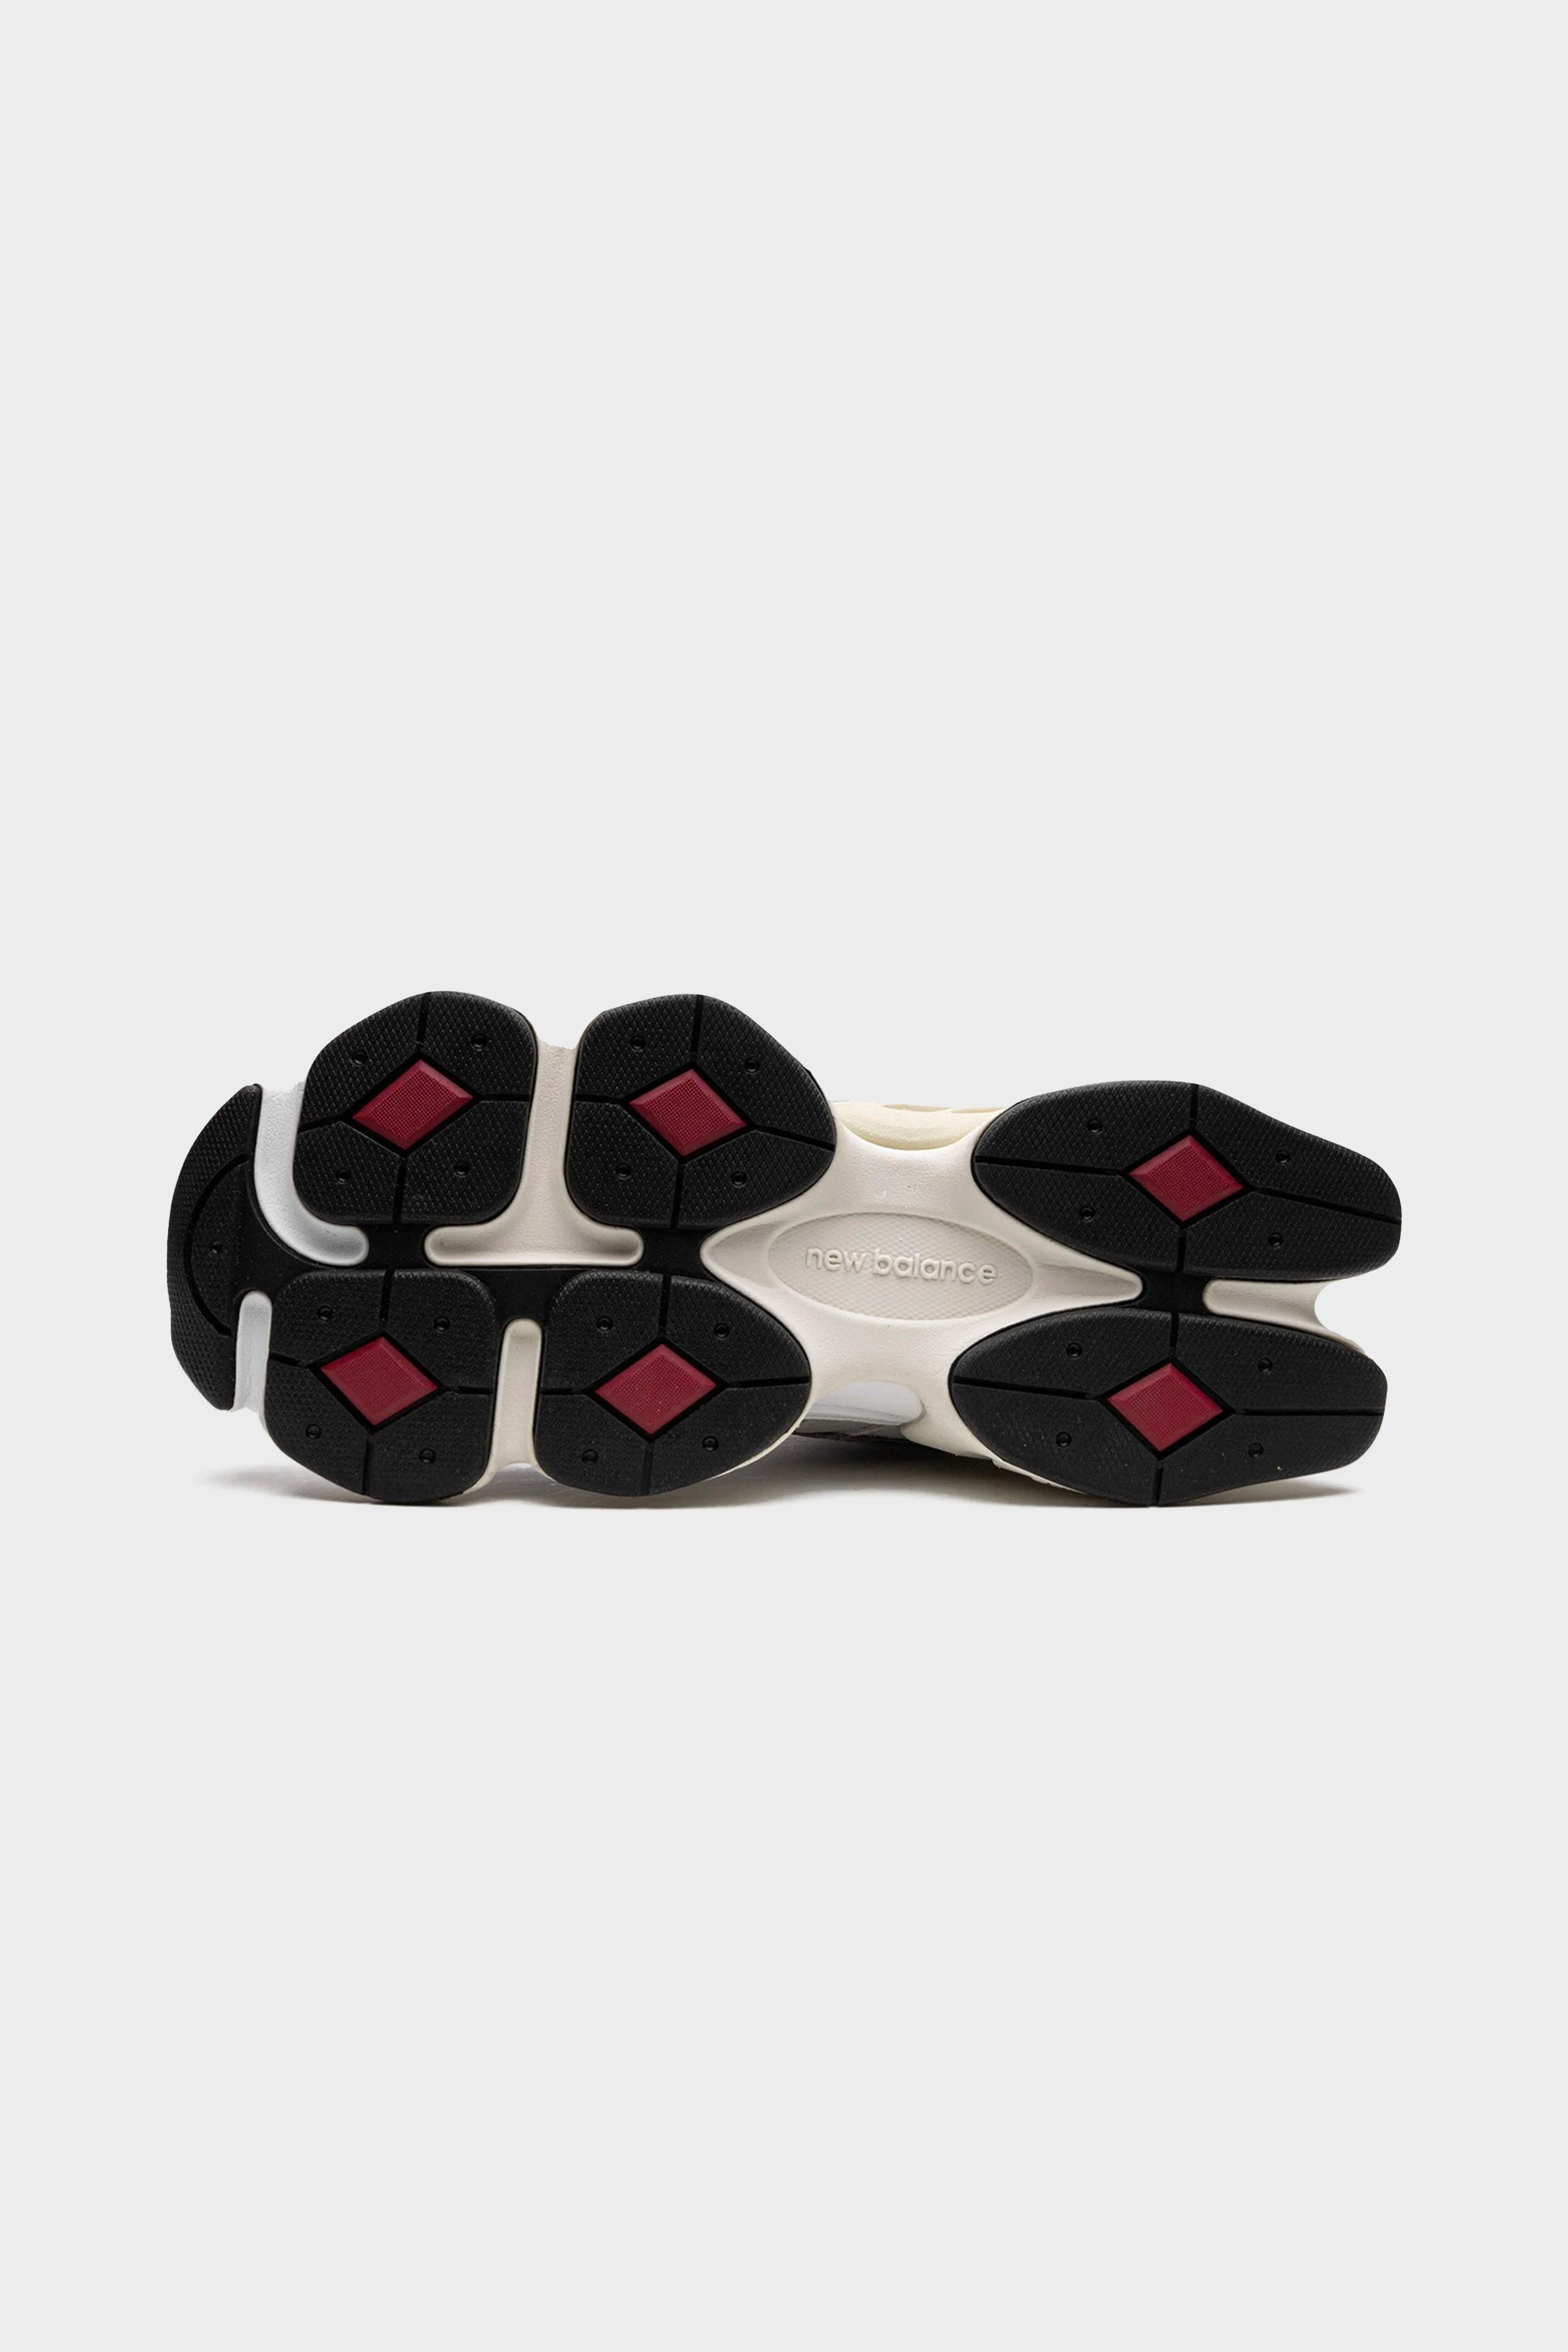 Selectshop FRAME - NEW BALANCE 9060 "Rain Cloud Grey" Footwear Concept Store Dubai